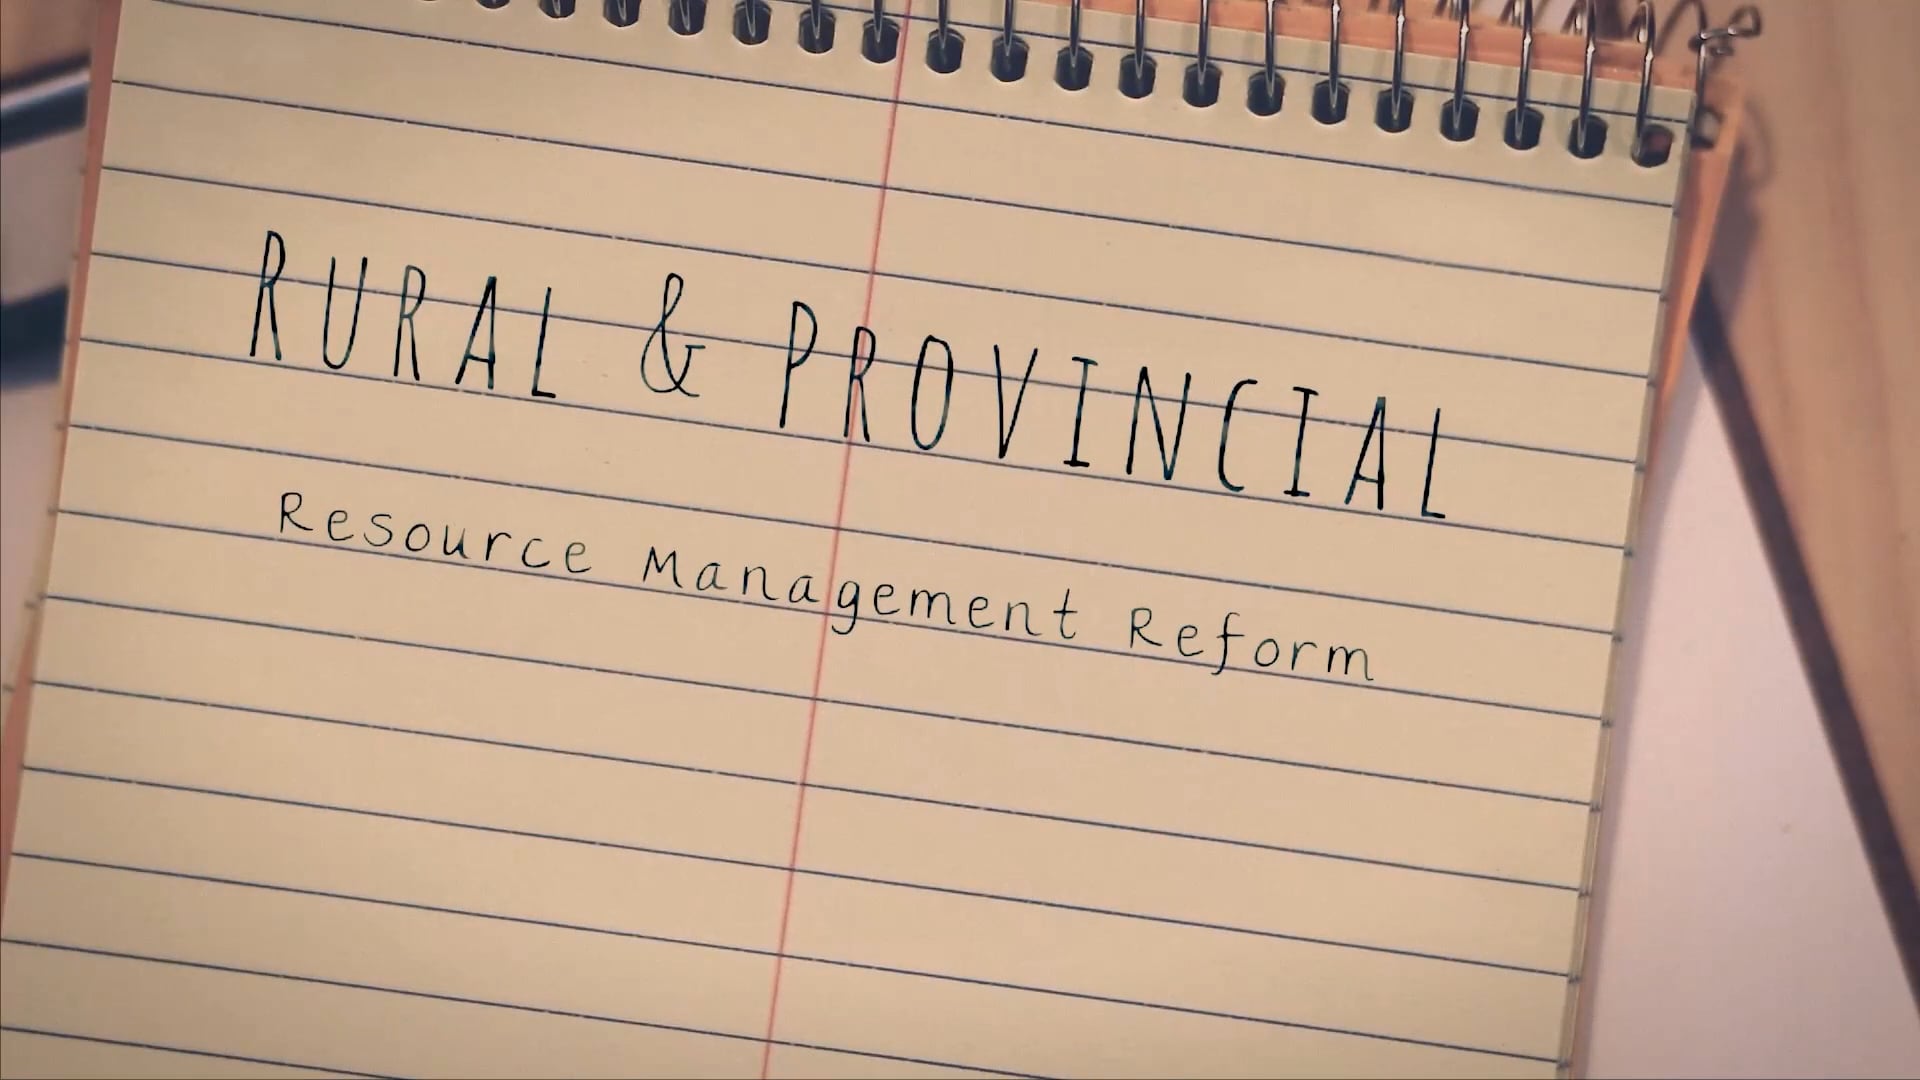 Rural & Provincial - Resource Management Reform